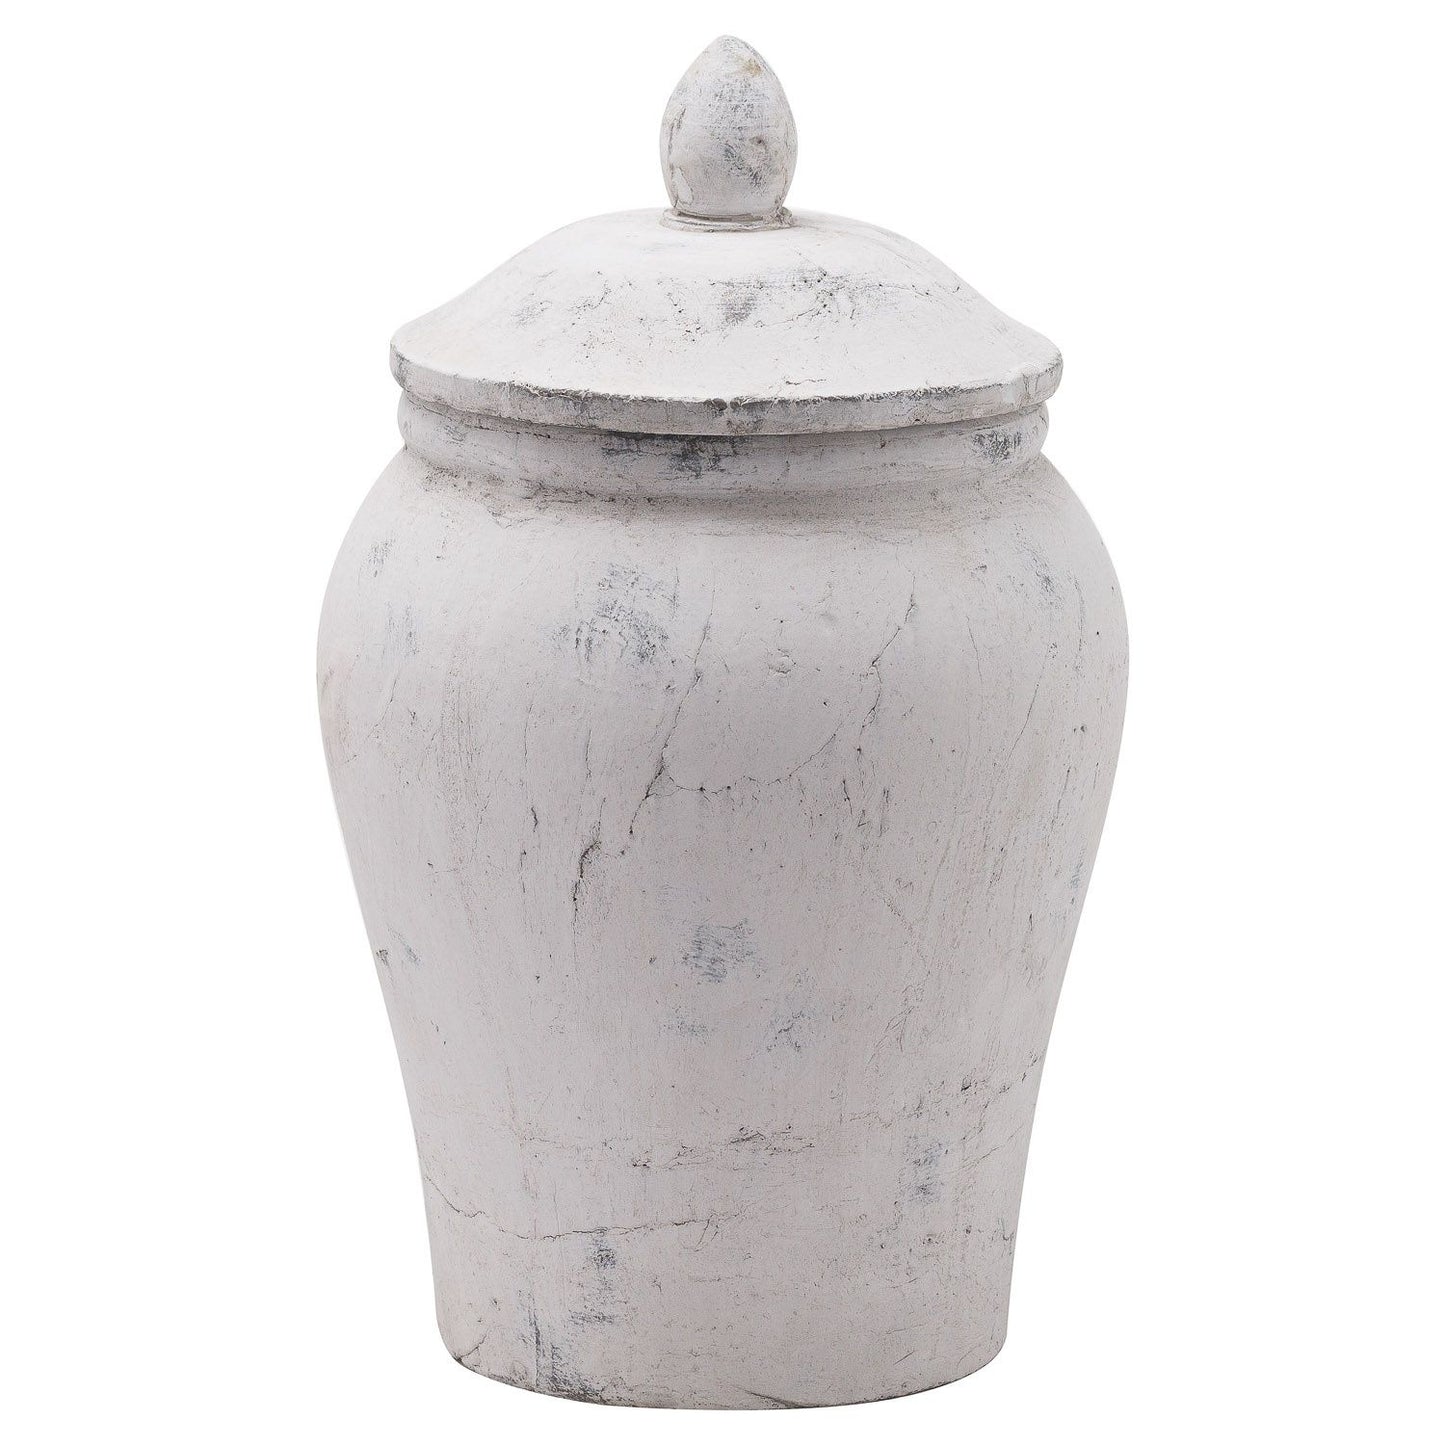 Kitchen Jar and Pot in stone coloured ceramic